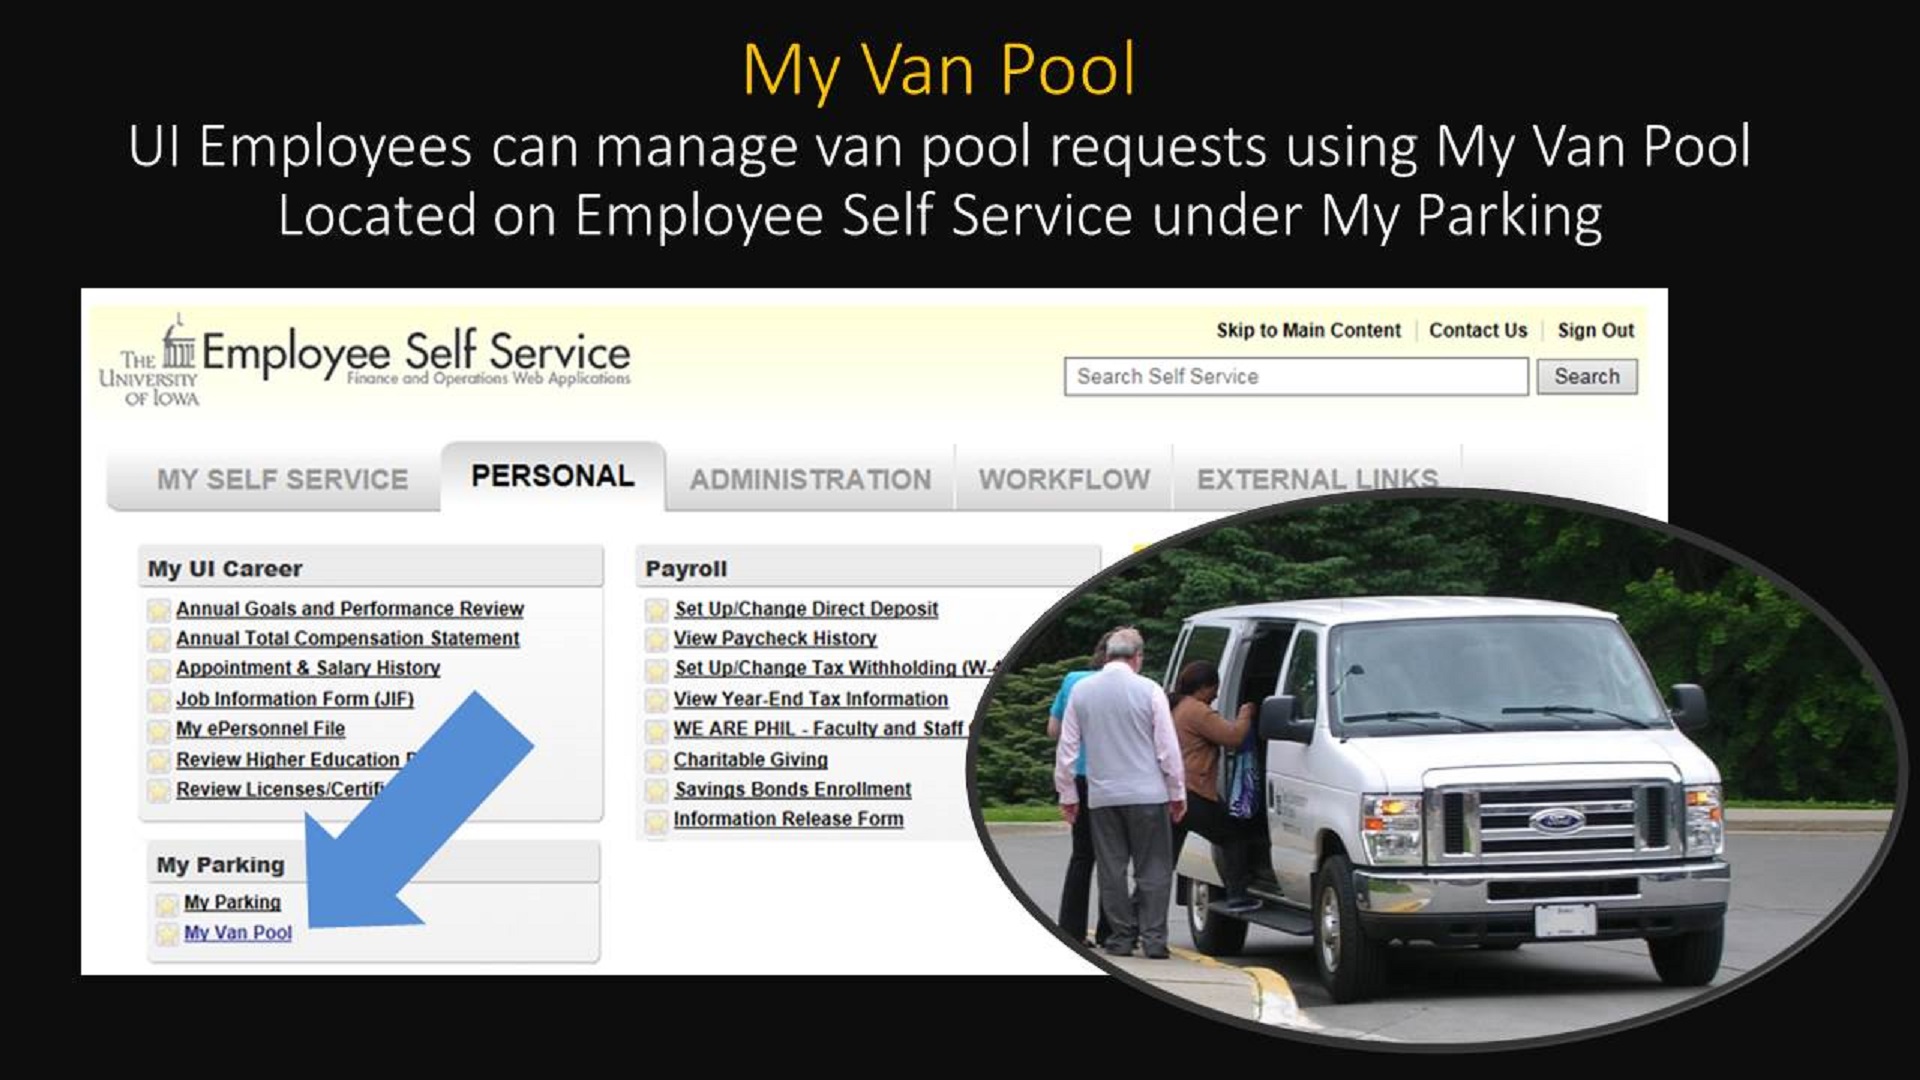 Employees can use My Van Pool to manage their van pool requests